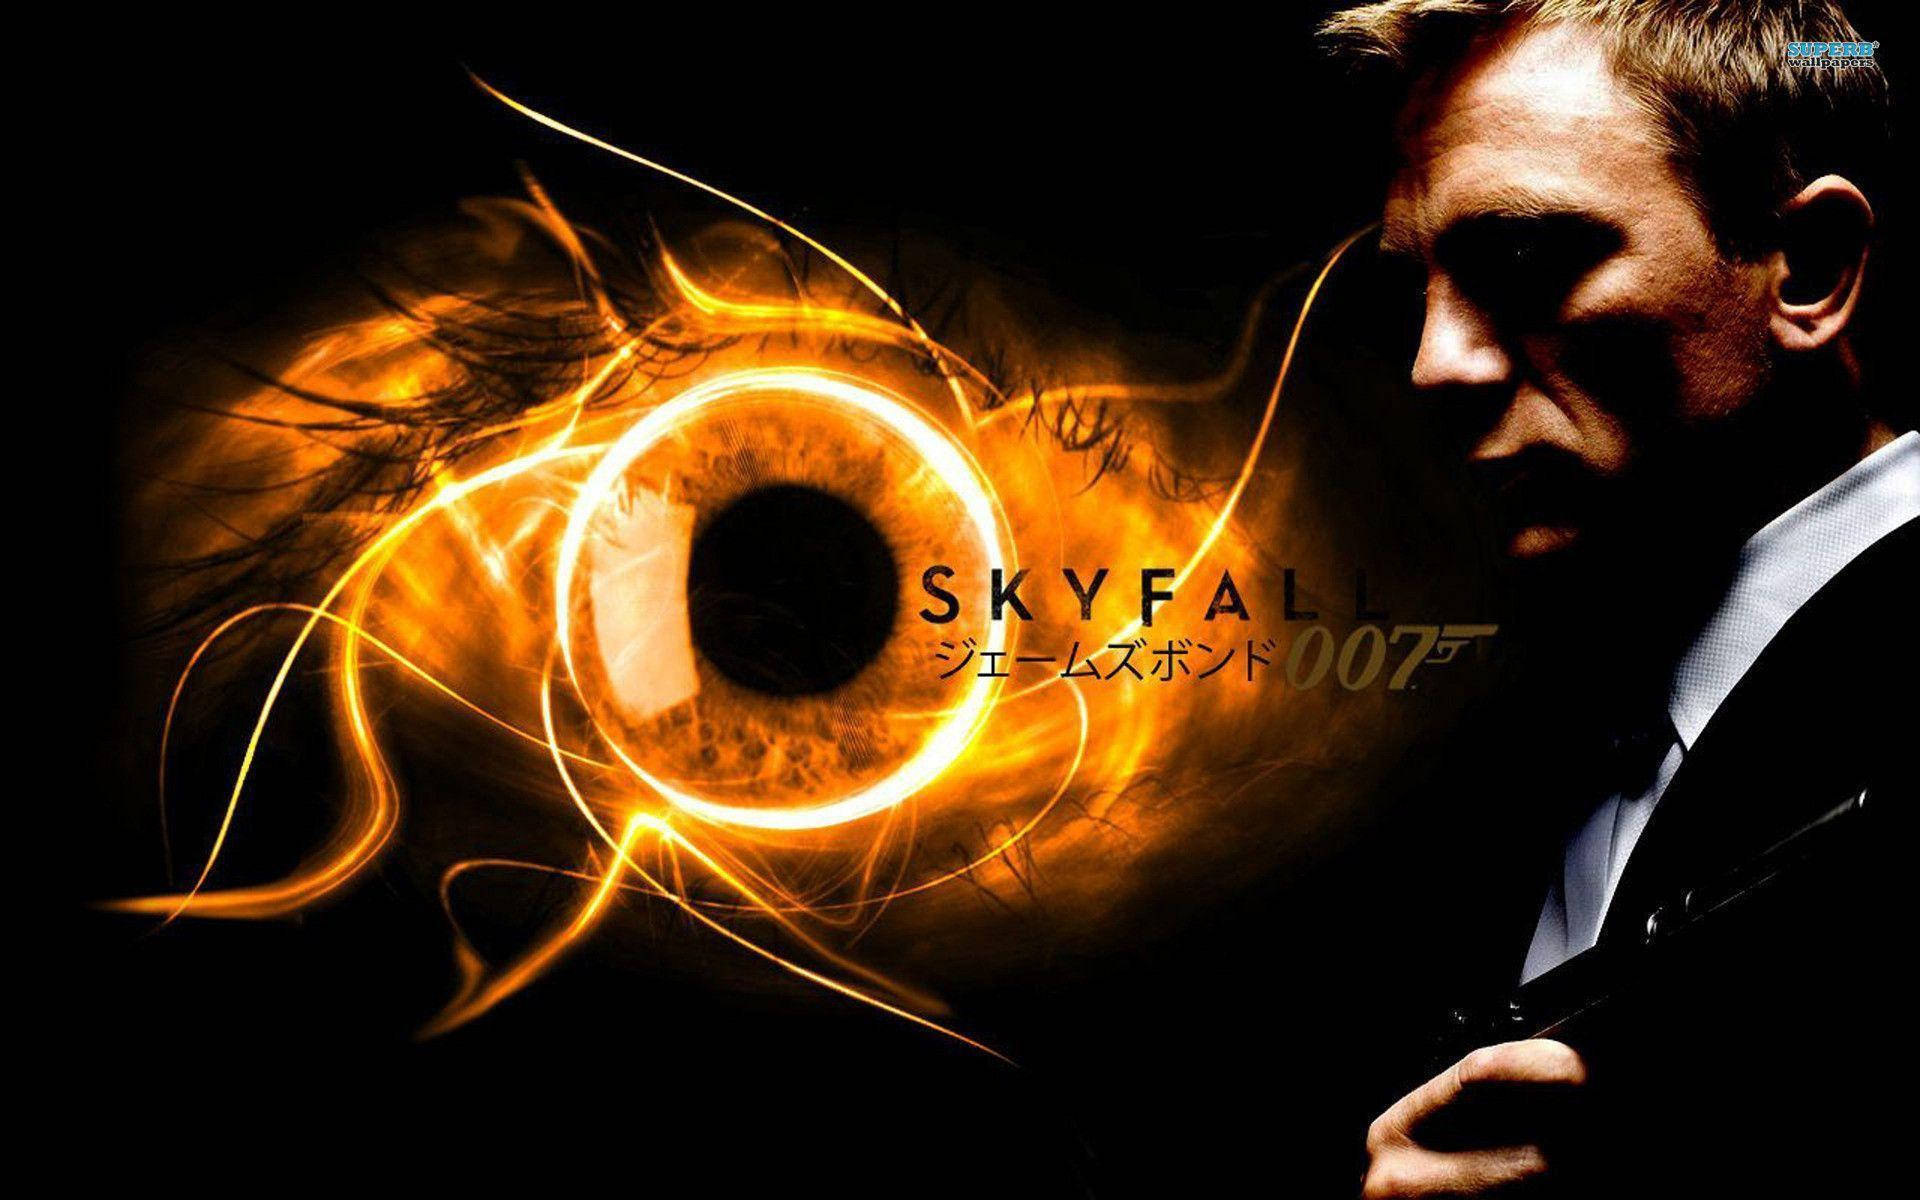 James Bond Skyfall Blazing Poster Wallpaper